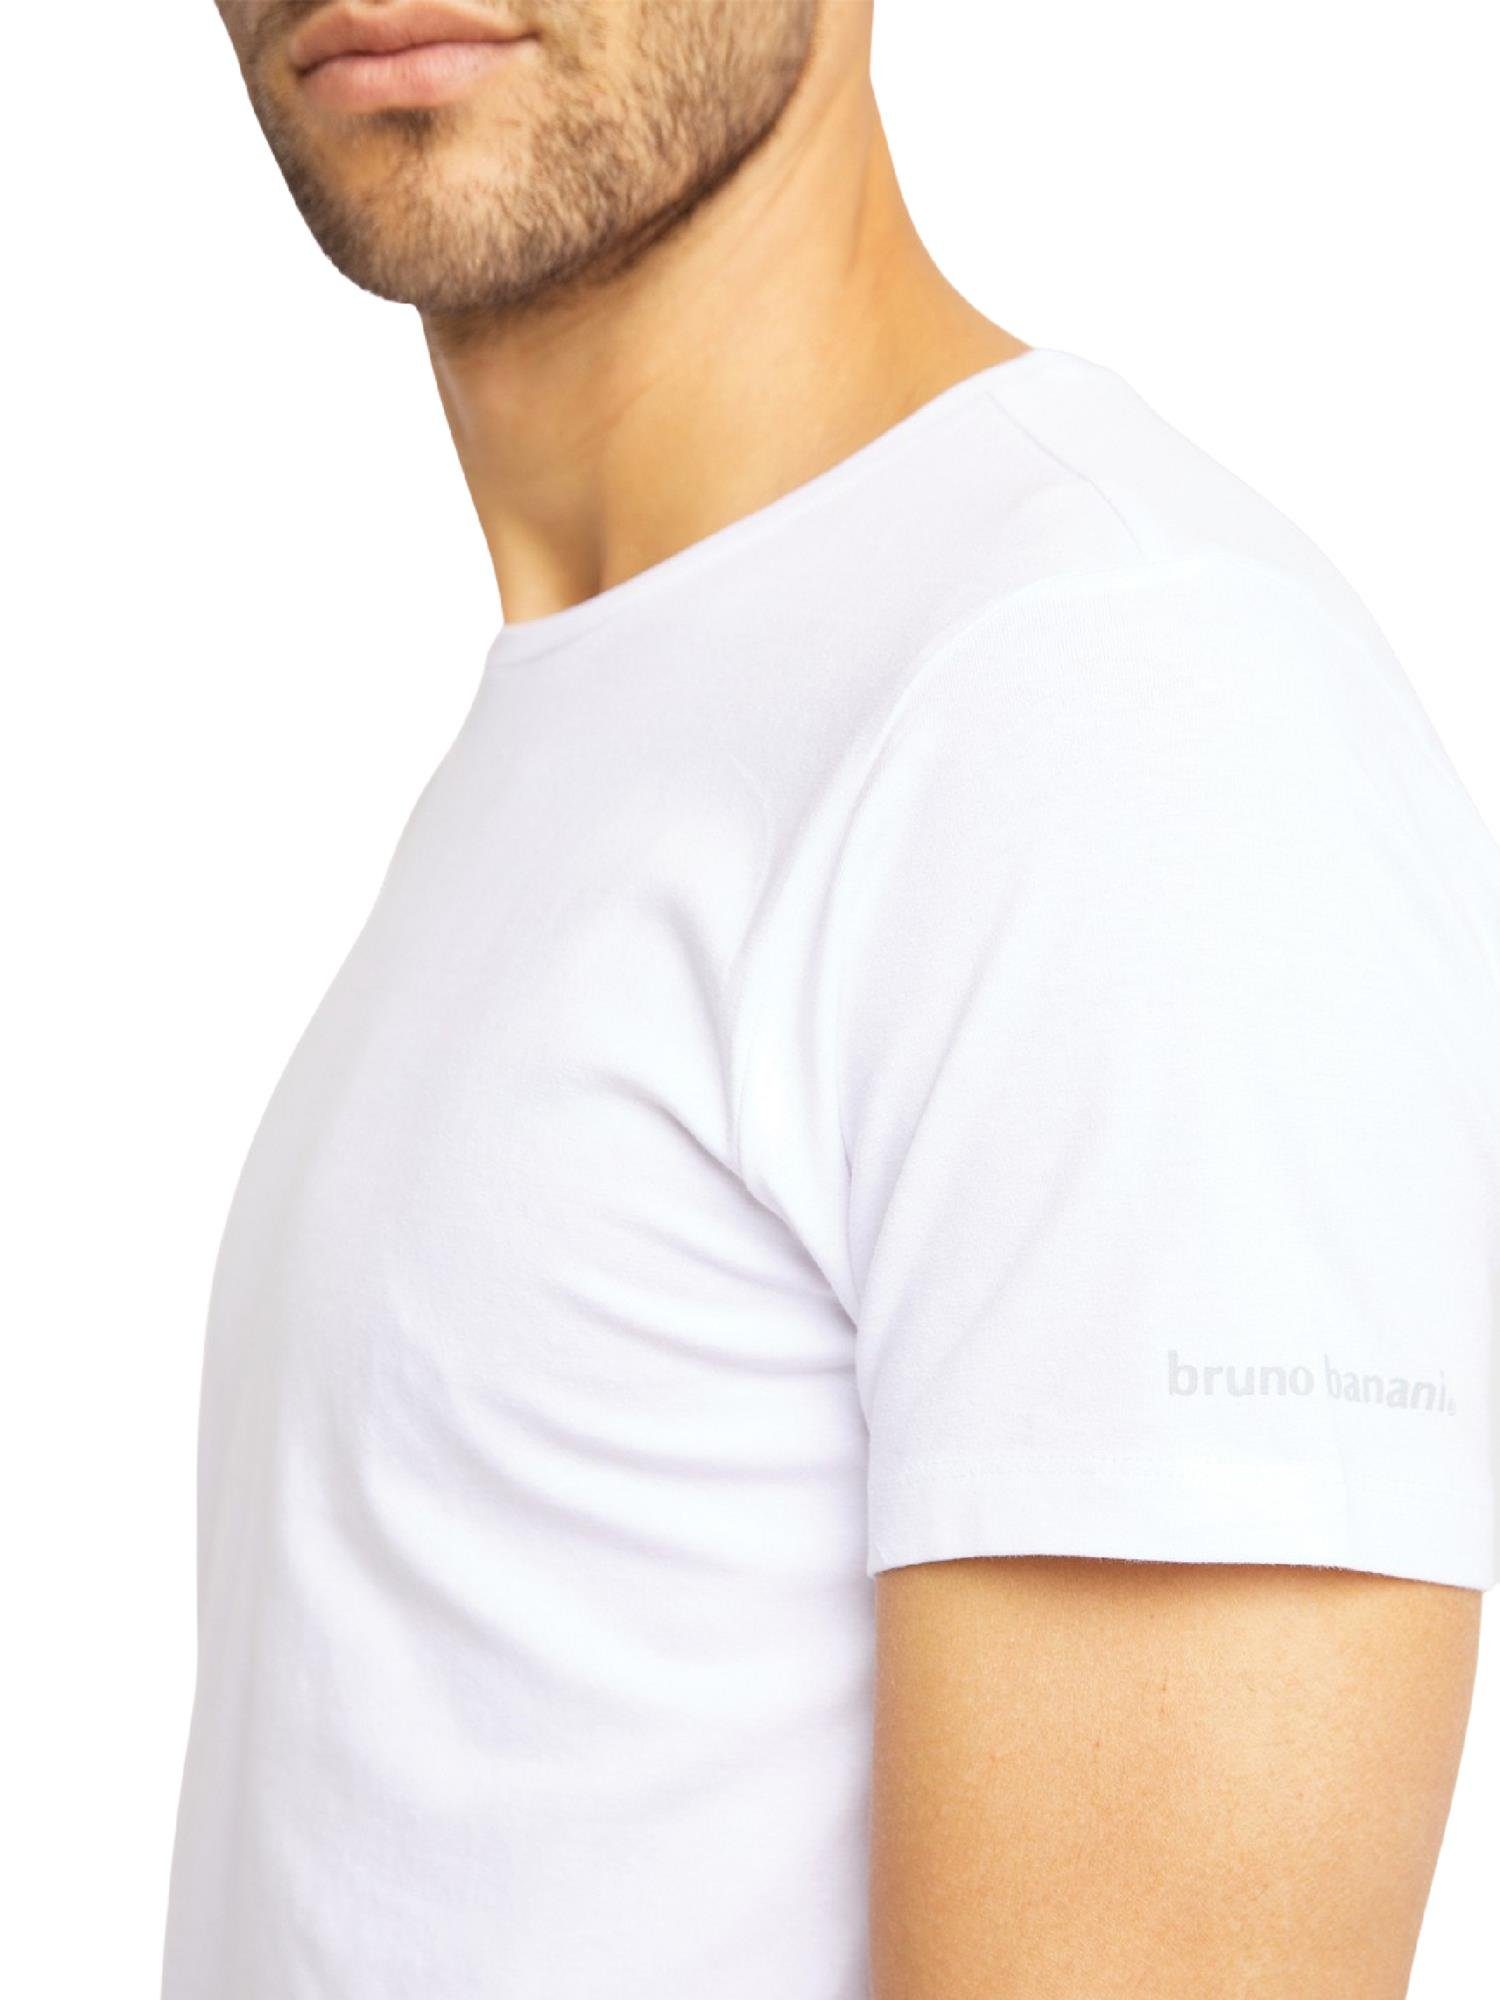 HENDERSON T-Shirt Weiß Bruno Banani